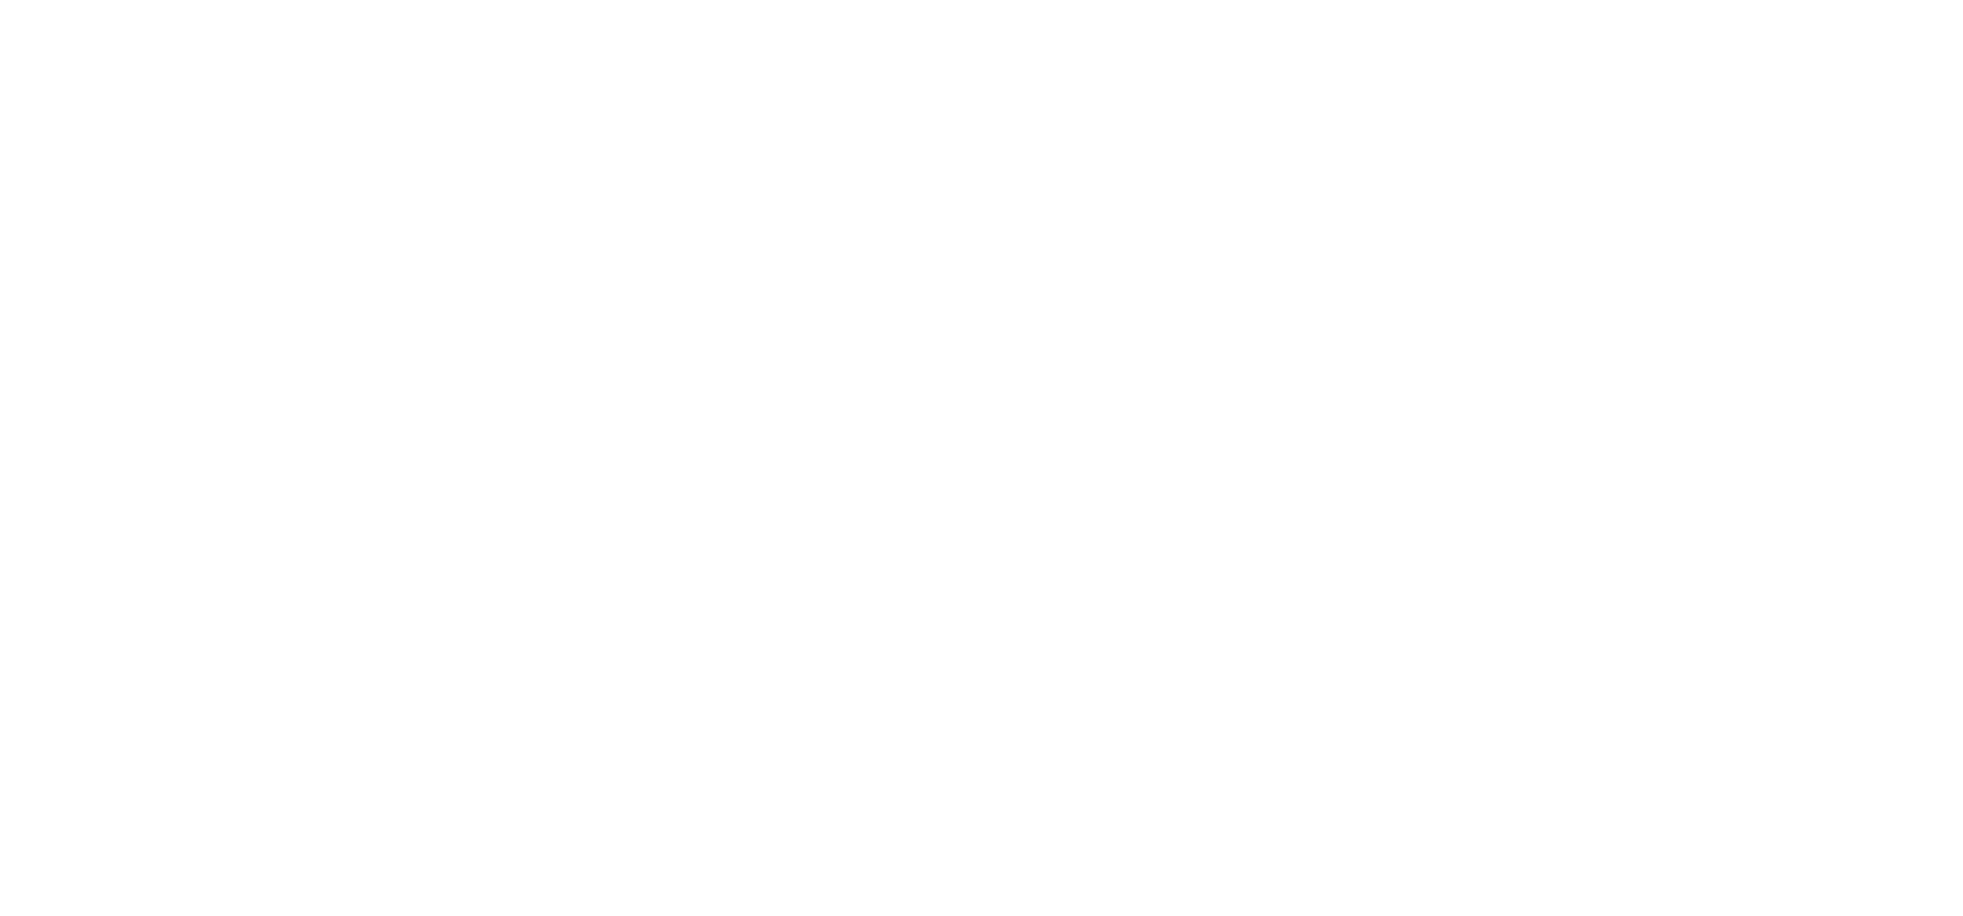 Productivity Partners